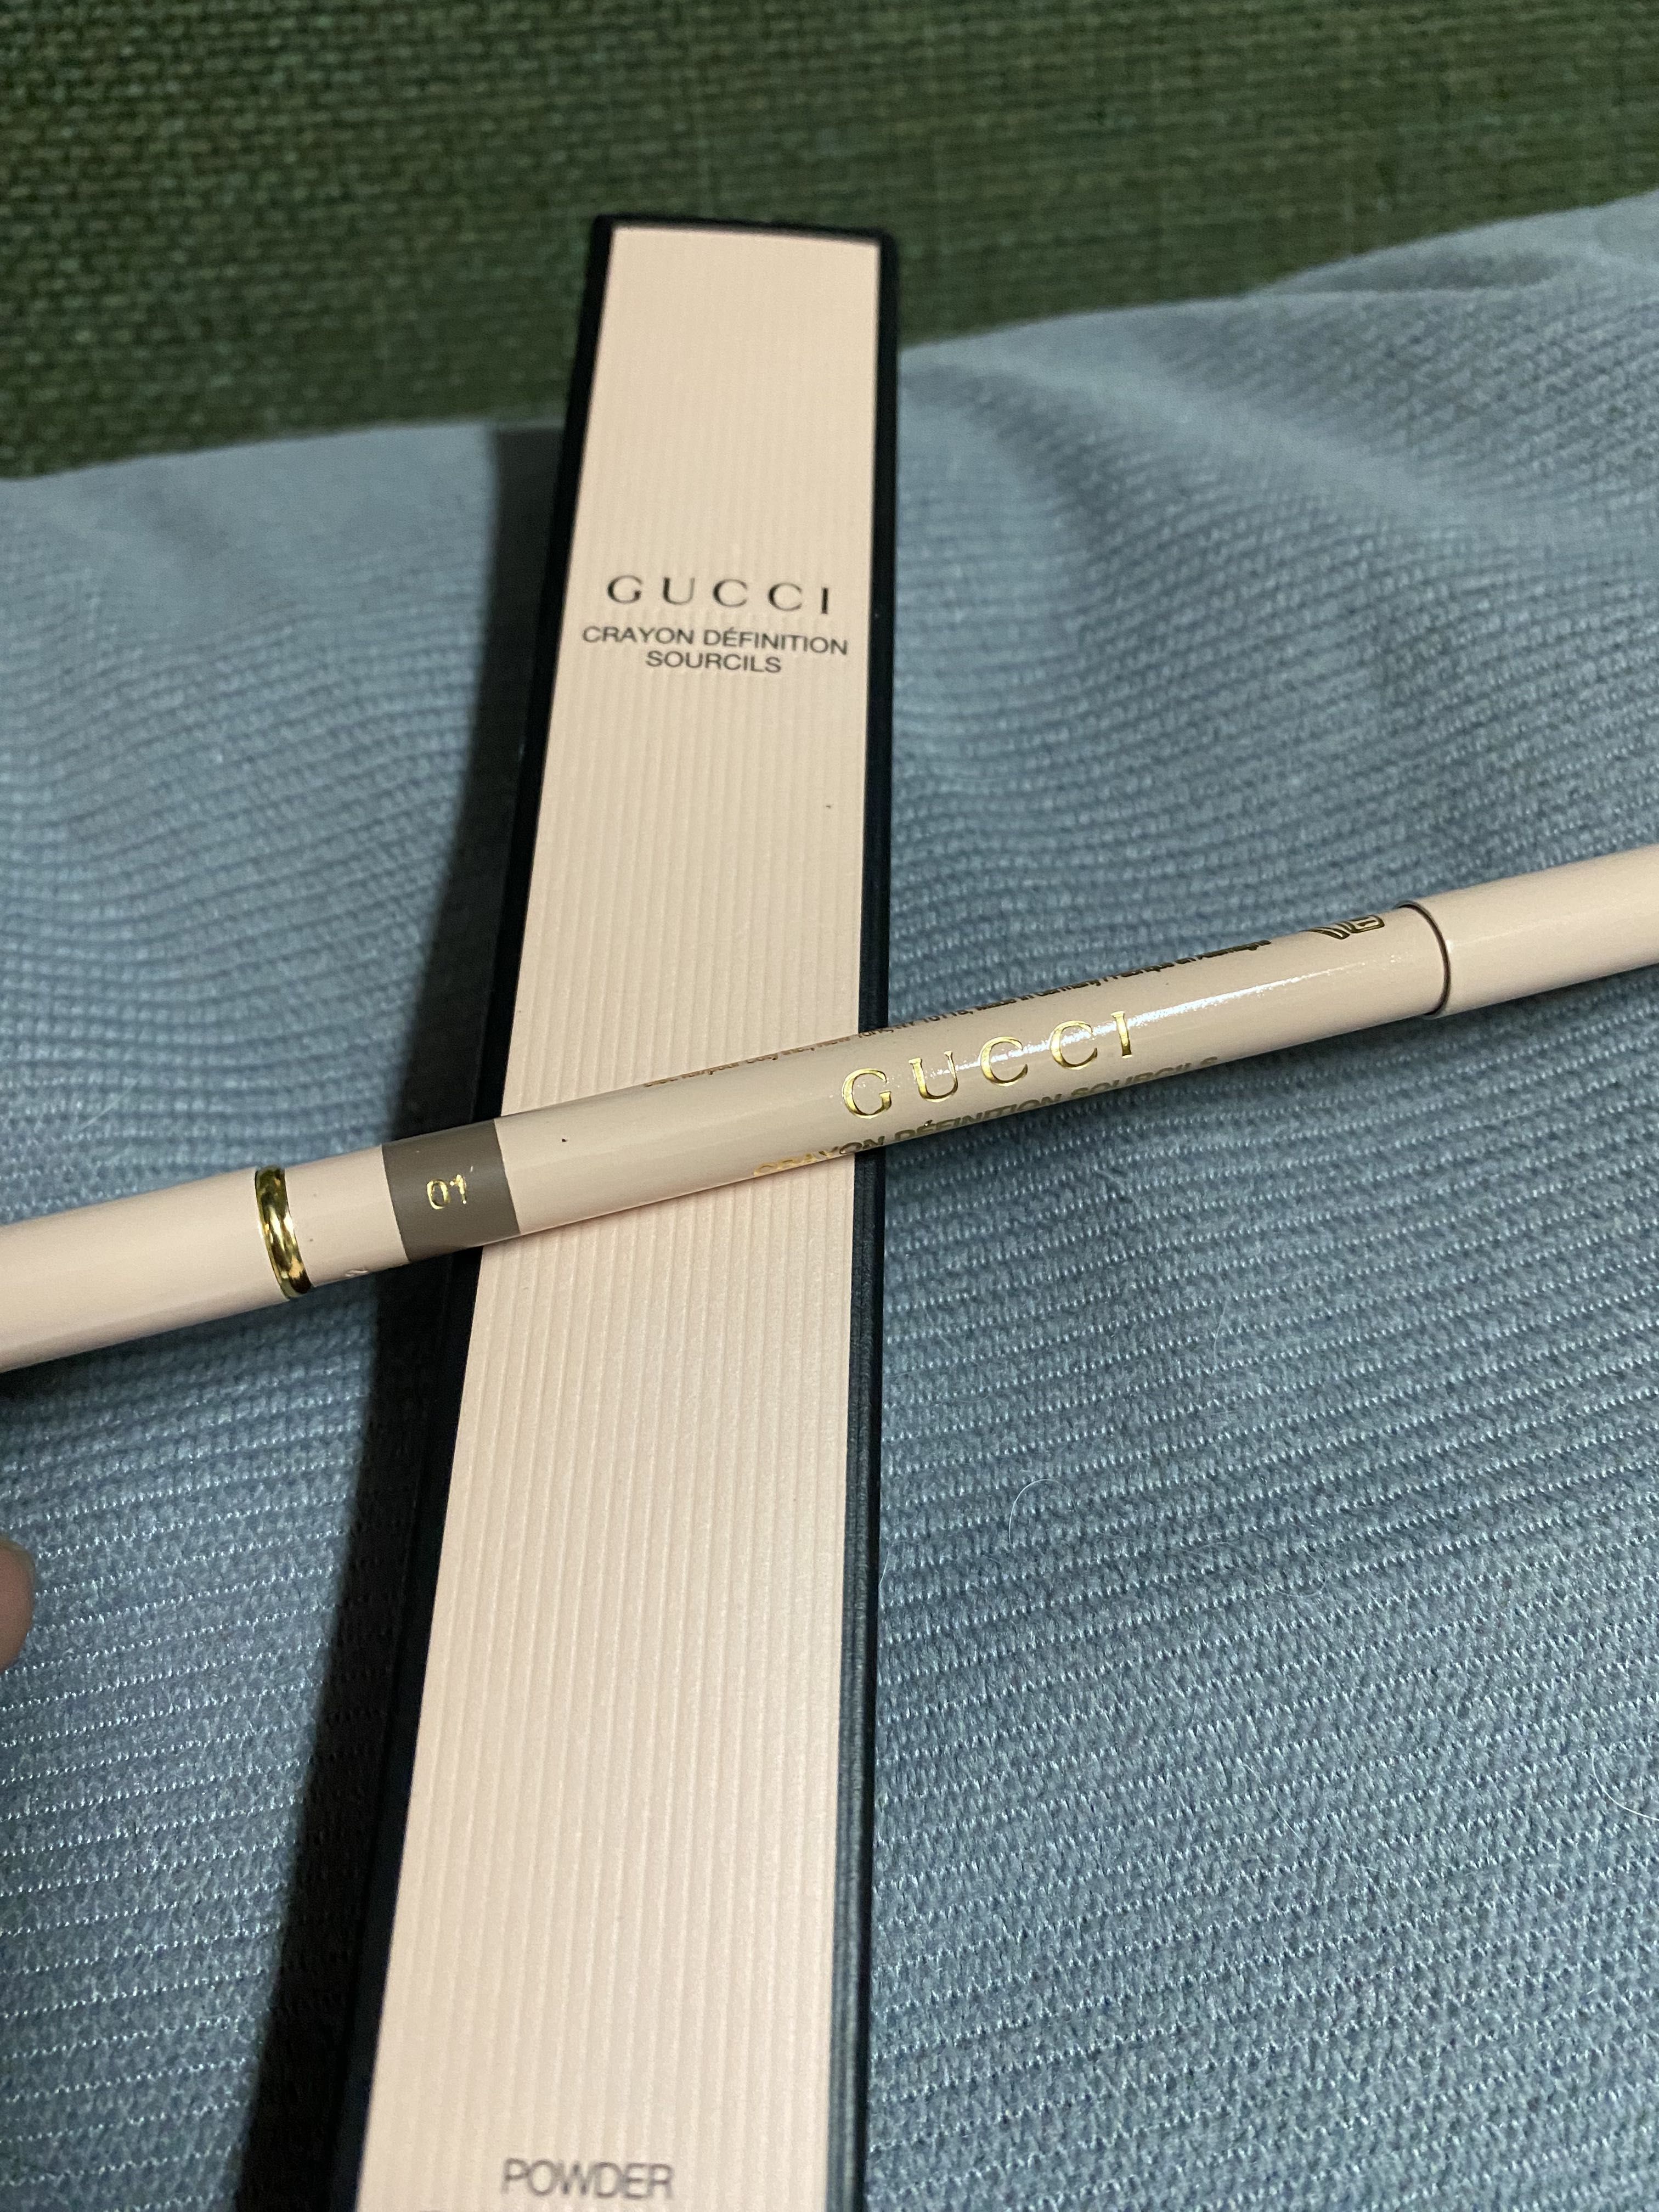 Gucci Brow pencil 01 眉筆, 美容＆化妝品, 健康及美容- 皮膚護理, 化妝品- Carousell